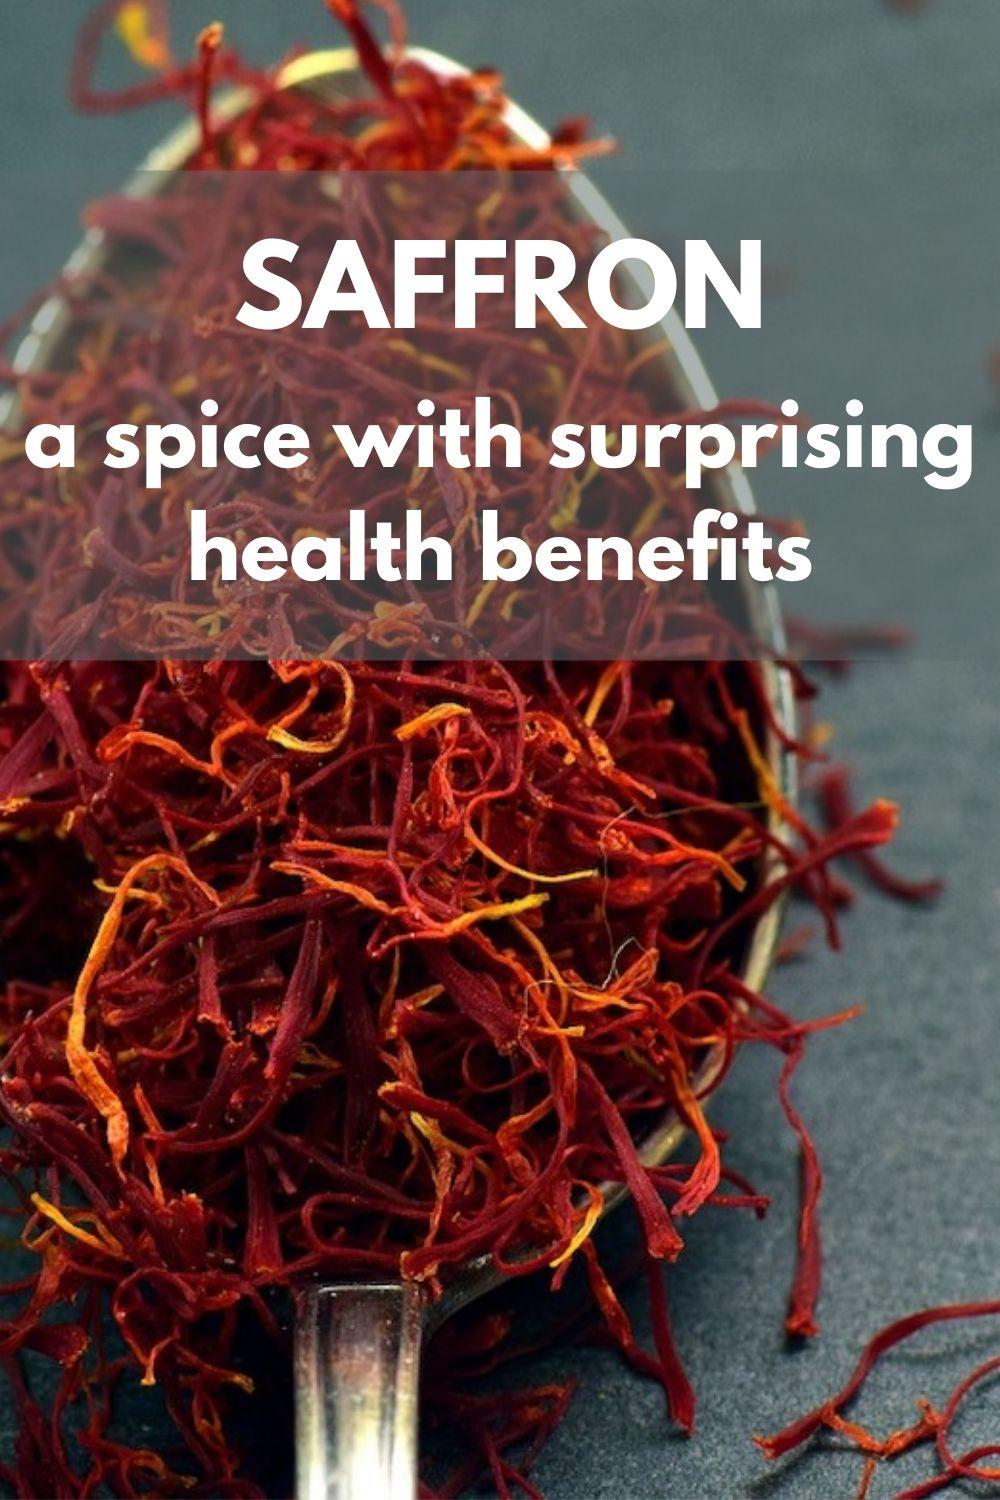 saffron benefits graphic